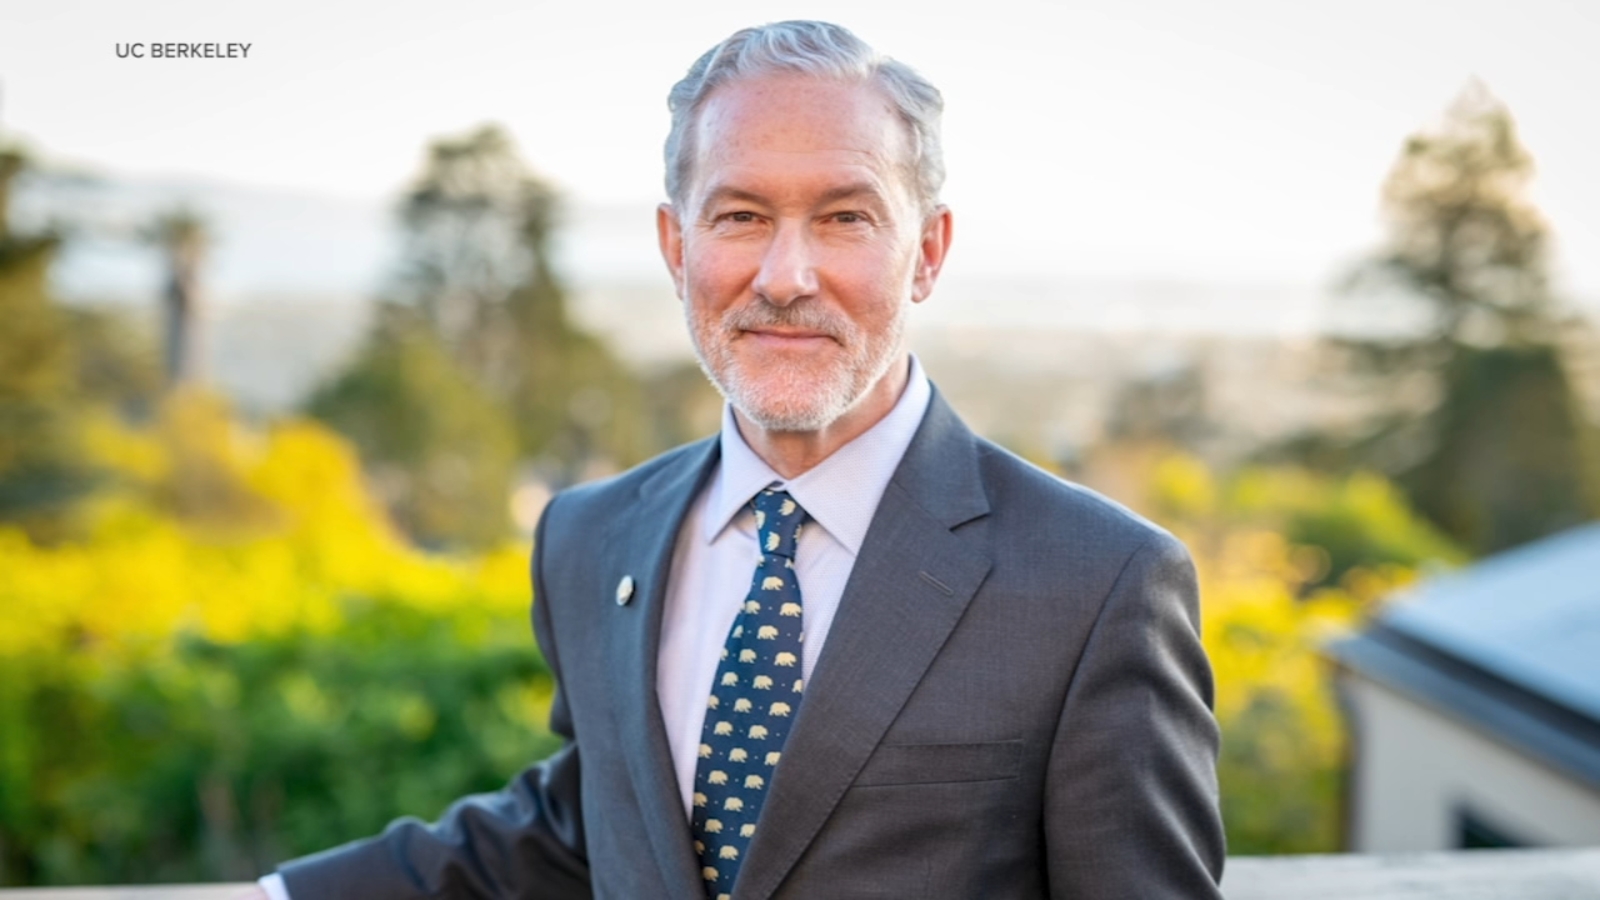 UC Berkeley news: University of California regents announce Rich Lyons as Cal’s next chancellor, replacing Carol Christ [Video]